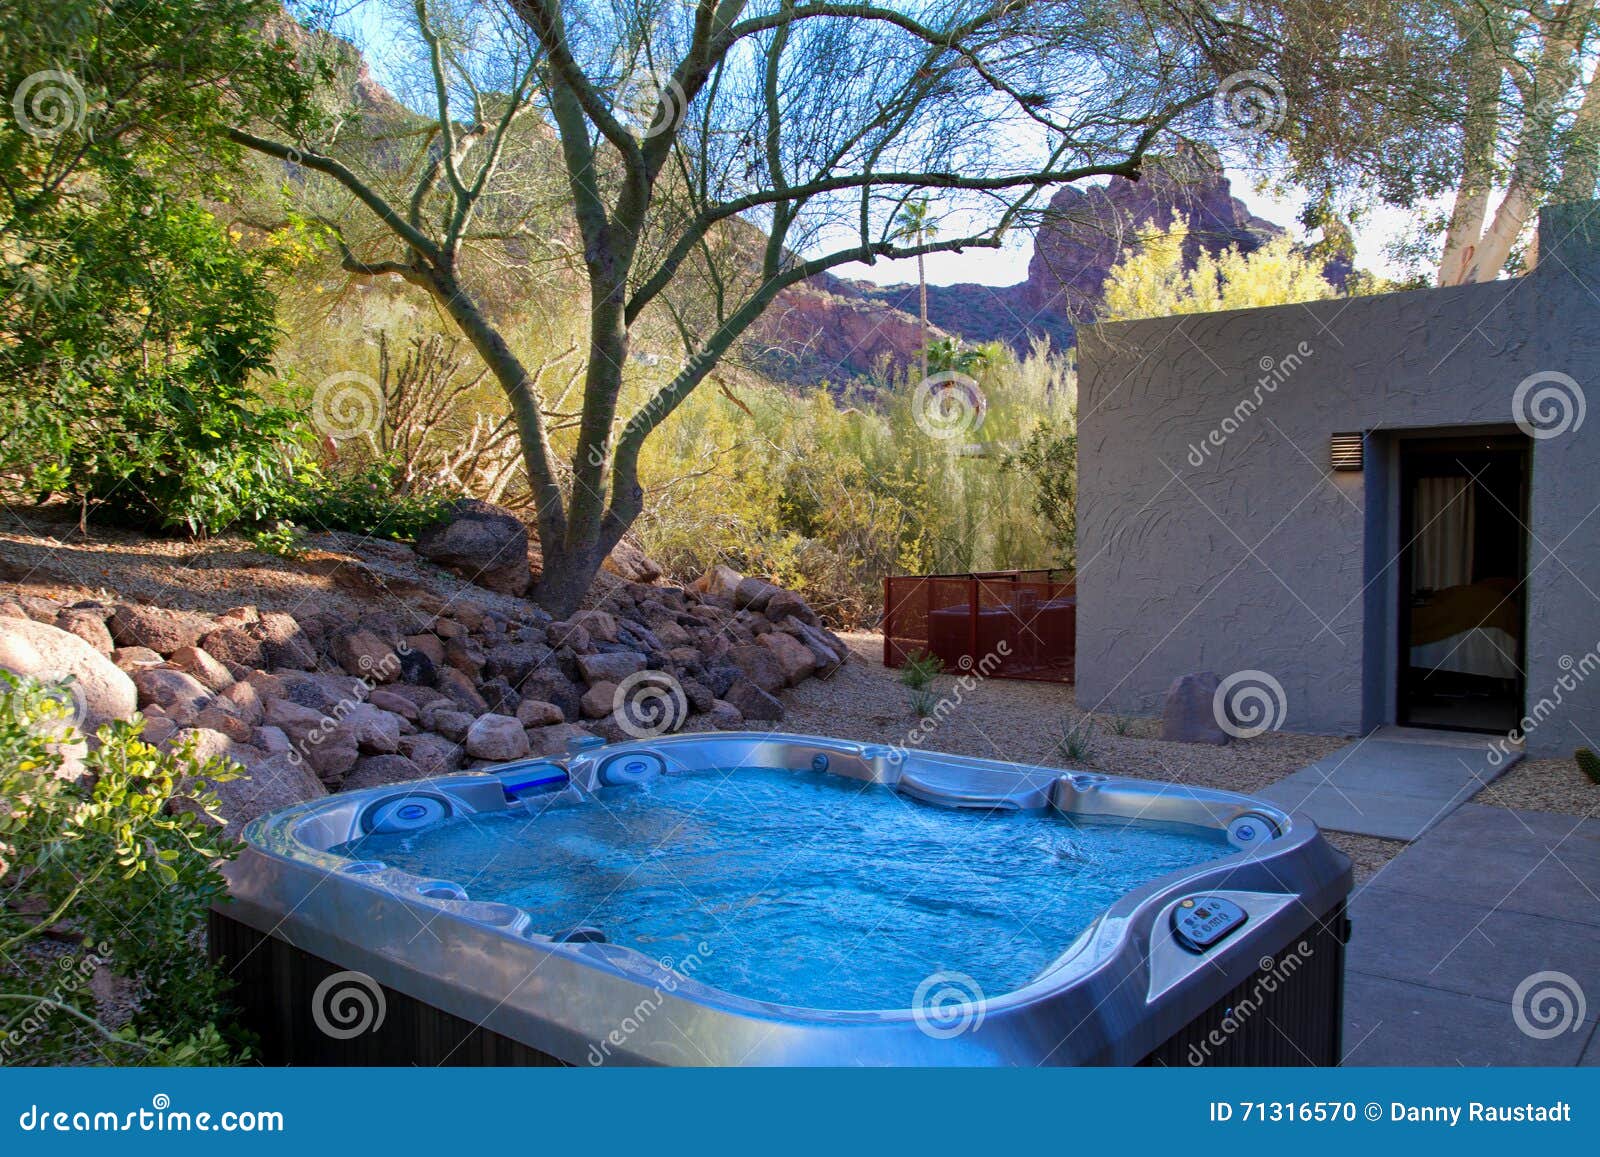 modern hotel resort hot tub spa